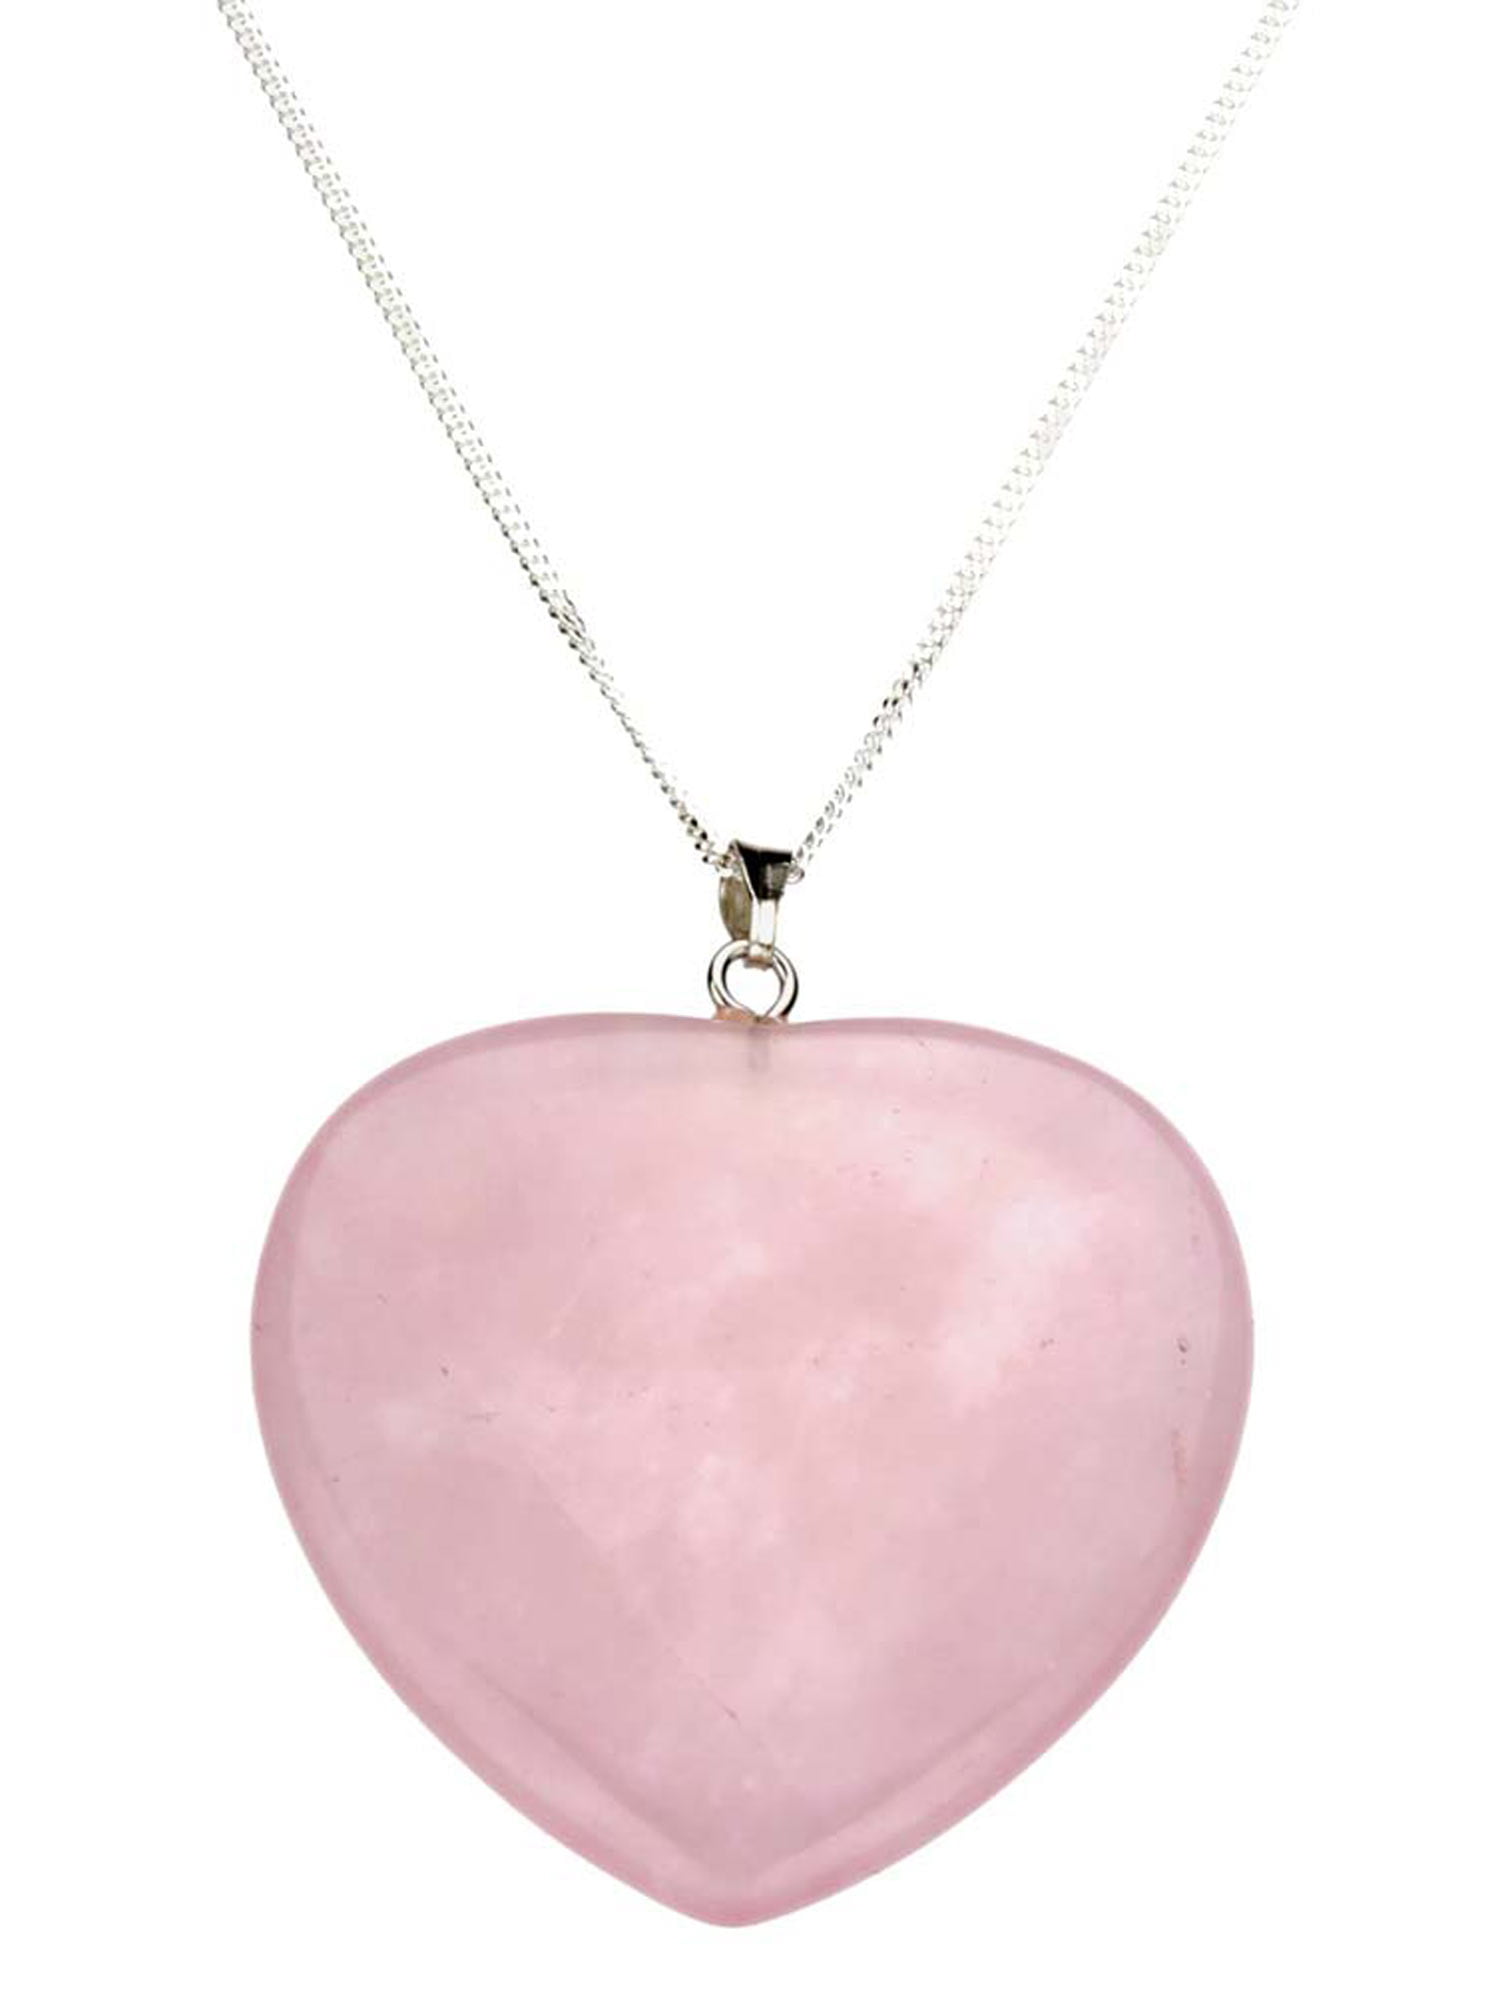 Large Rose Quartz Stone Heart Pendant Sterling Silver Curb Chain Necklace 20